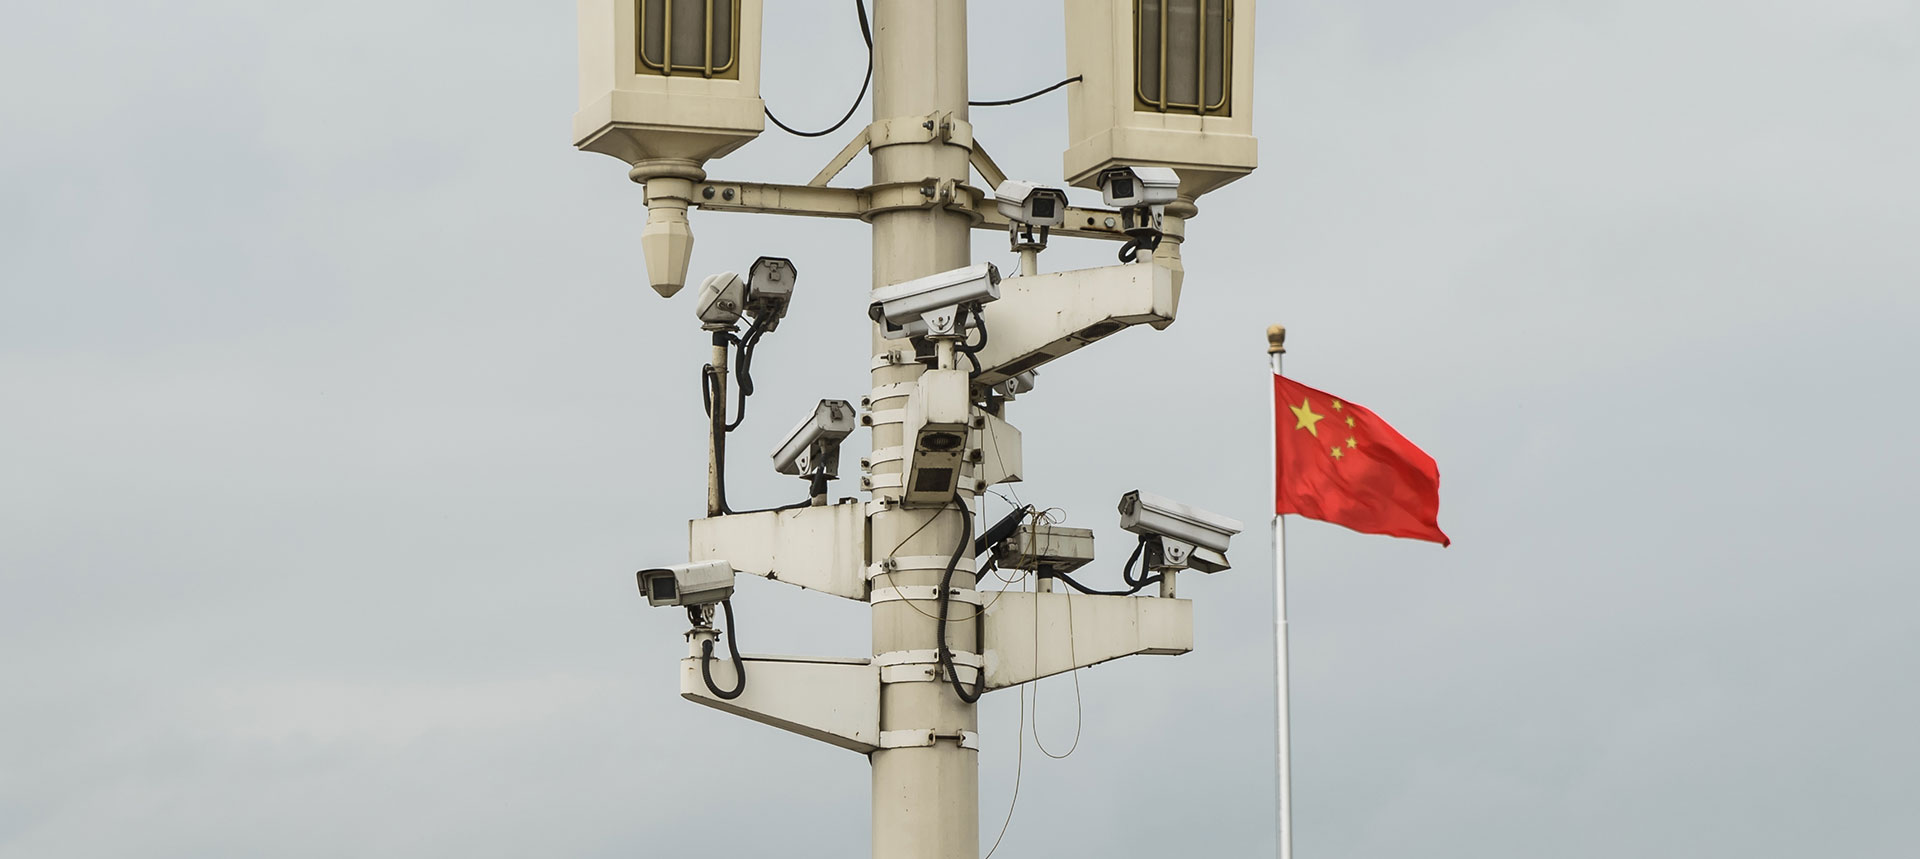 China surveillance, China news, China social credits system, China Cultural Revolution, China surveillance state, Xi Jinping news, China Communist Party, Chine surveillance state, China Uighur Muslims